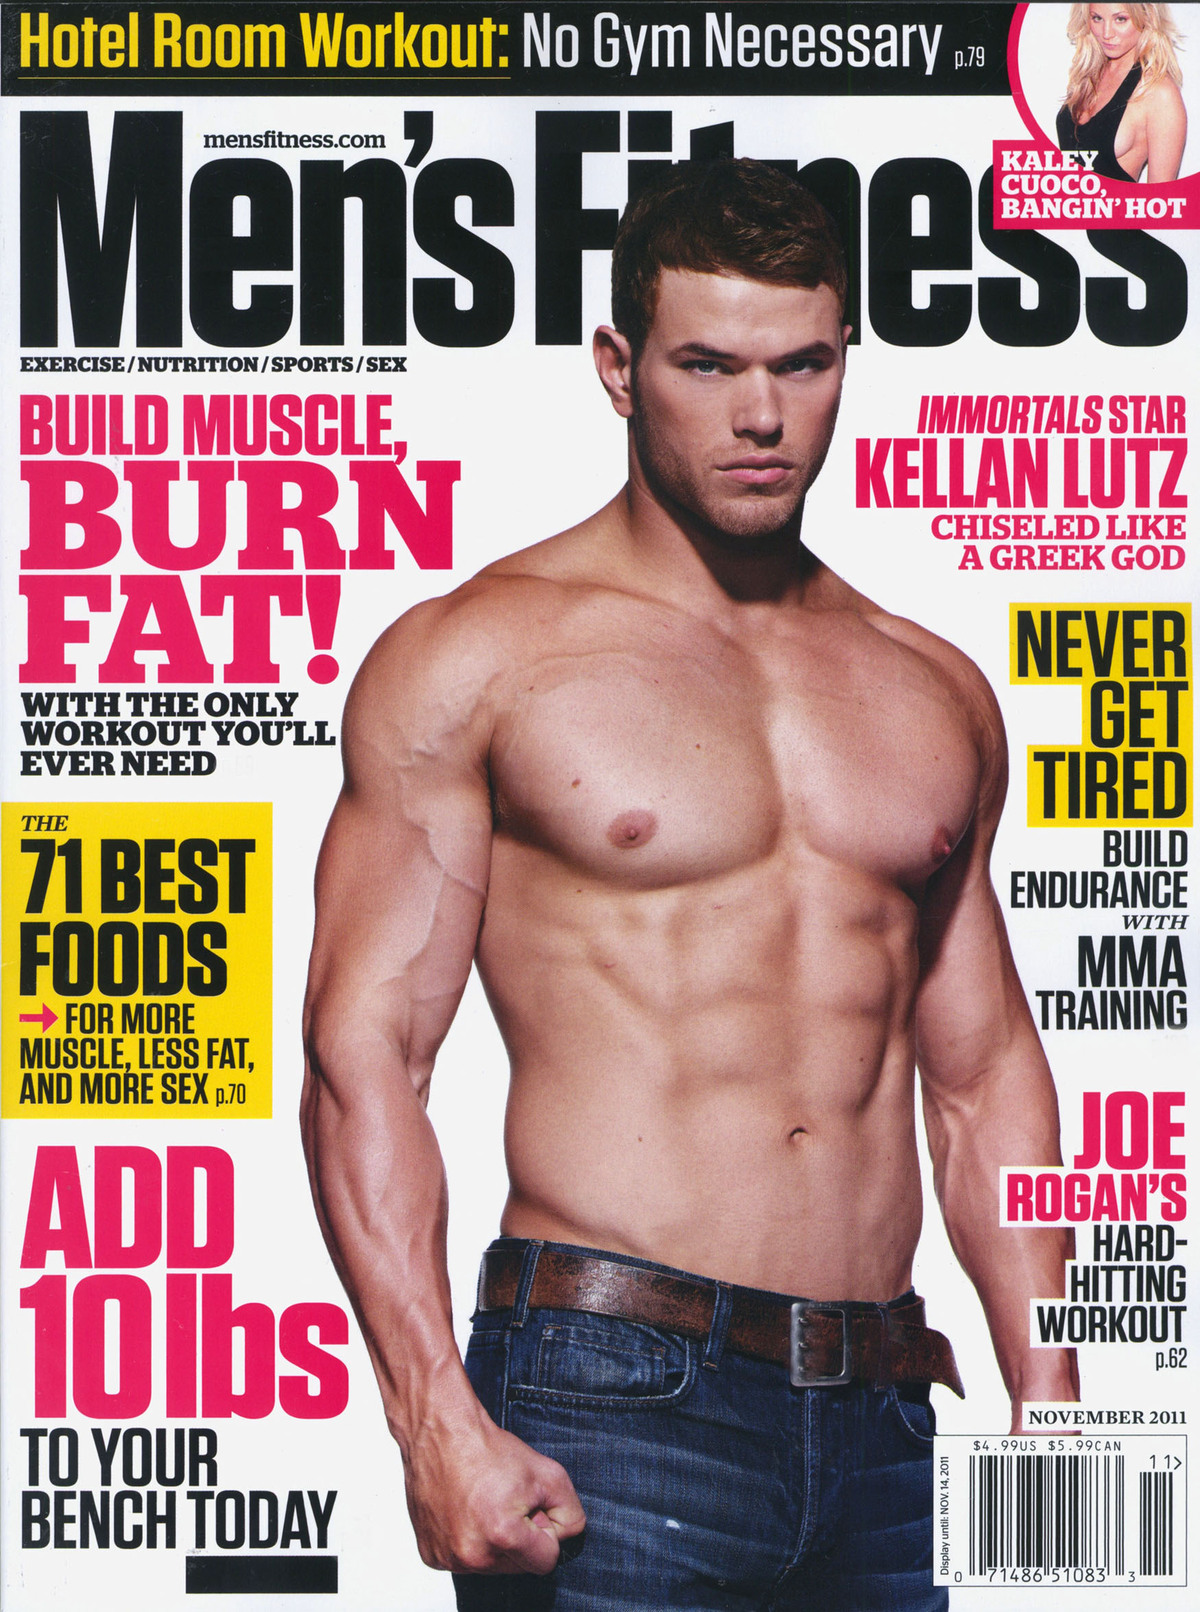 Видео: Келлан Латс на съемках для журнала Men's Fitness.